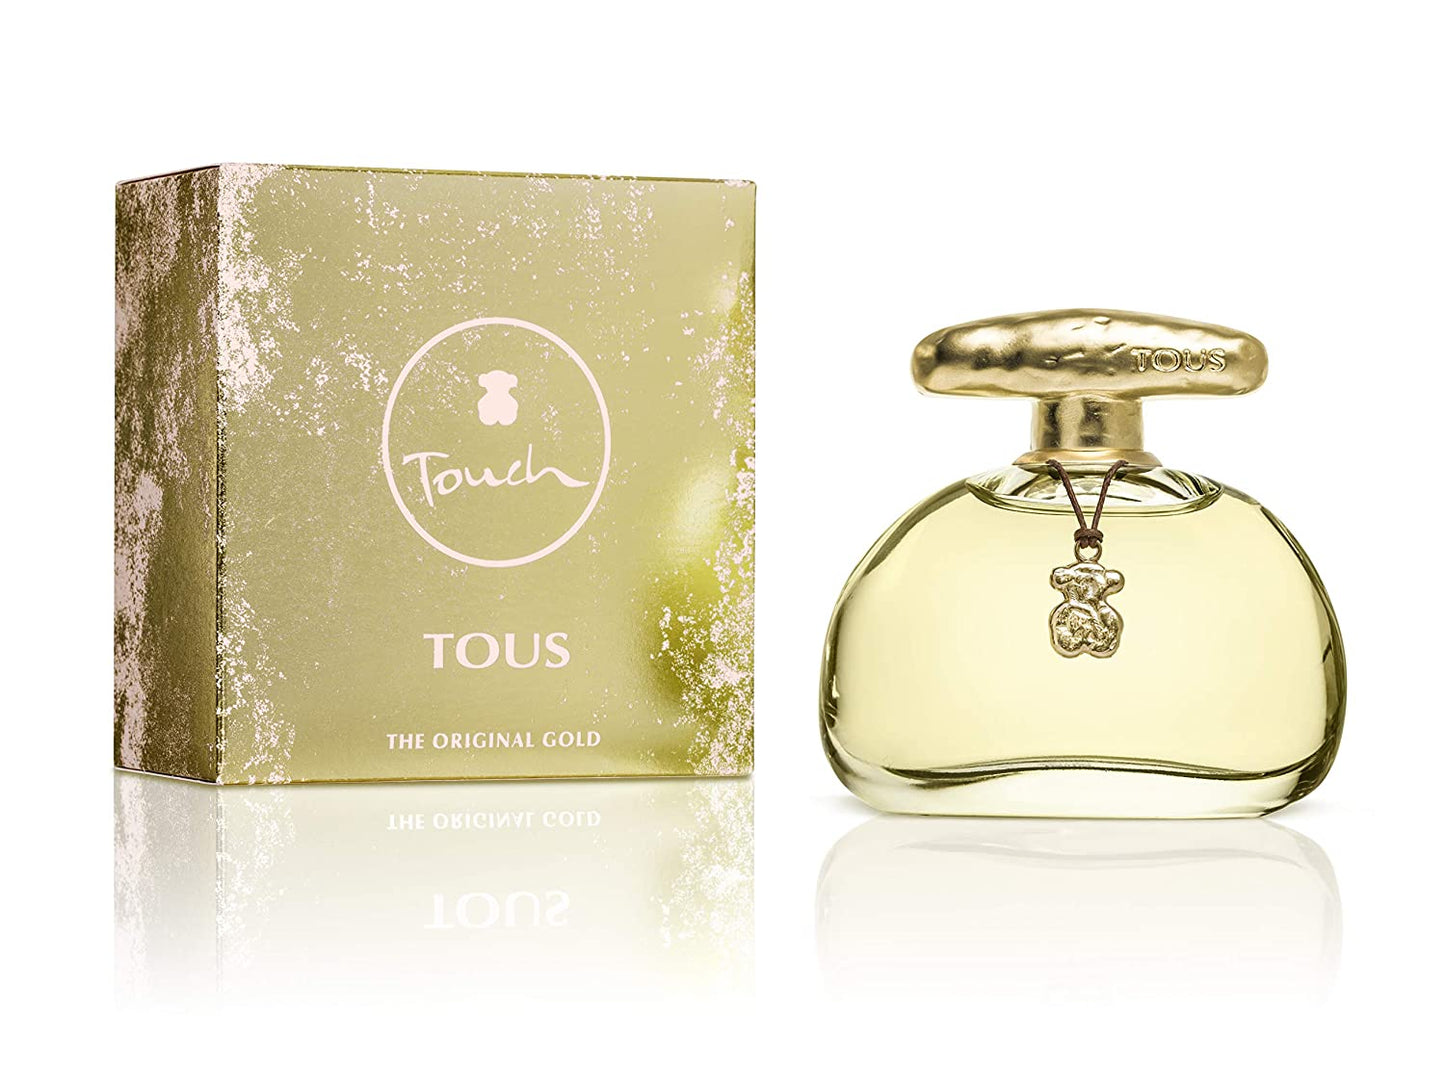 Tous Touch Sensual Perfume for Women 3 Piece Gift Set (3.4 oz Eau de Toilette Spray + 10 mL Eau de Toilette Mini + 1.7 oz Body Lotion)